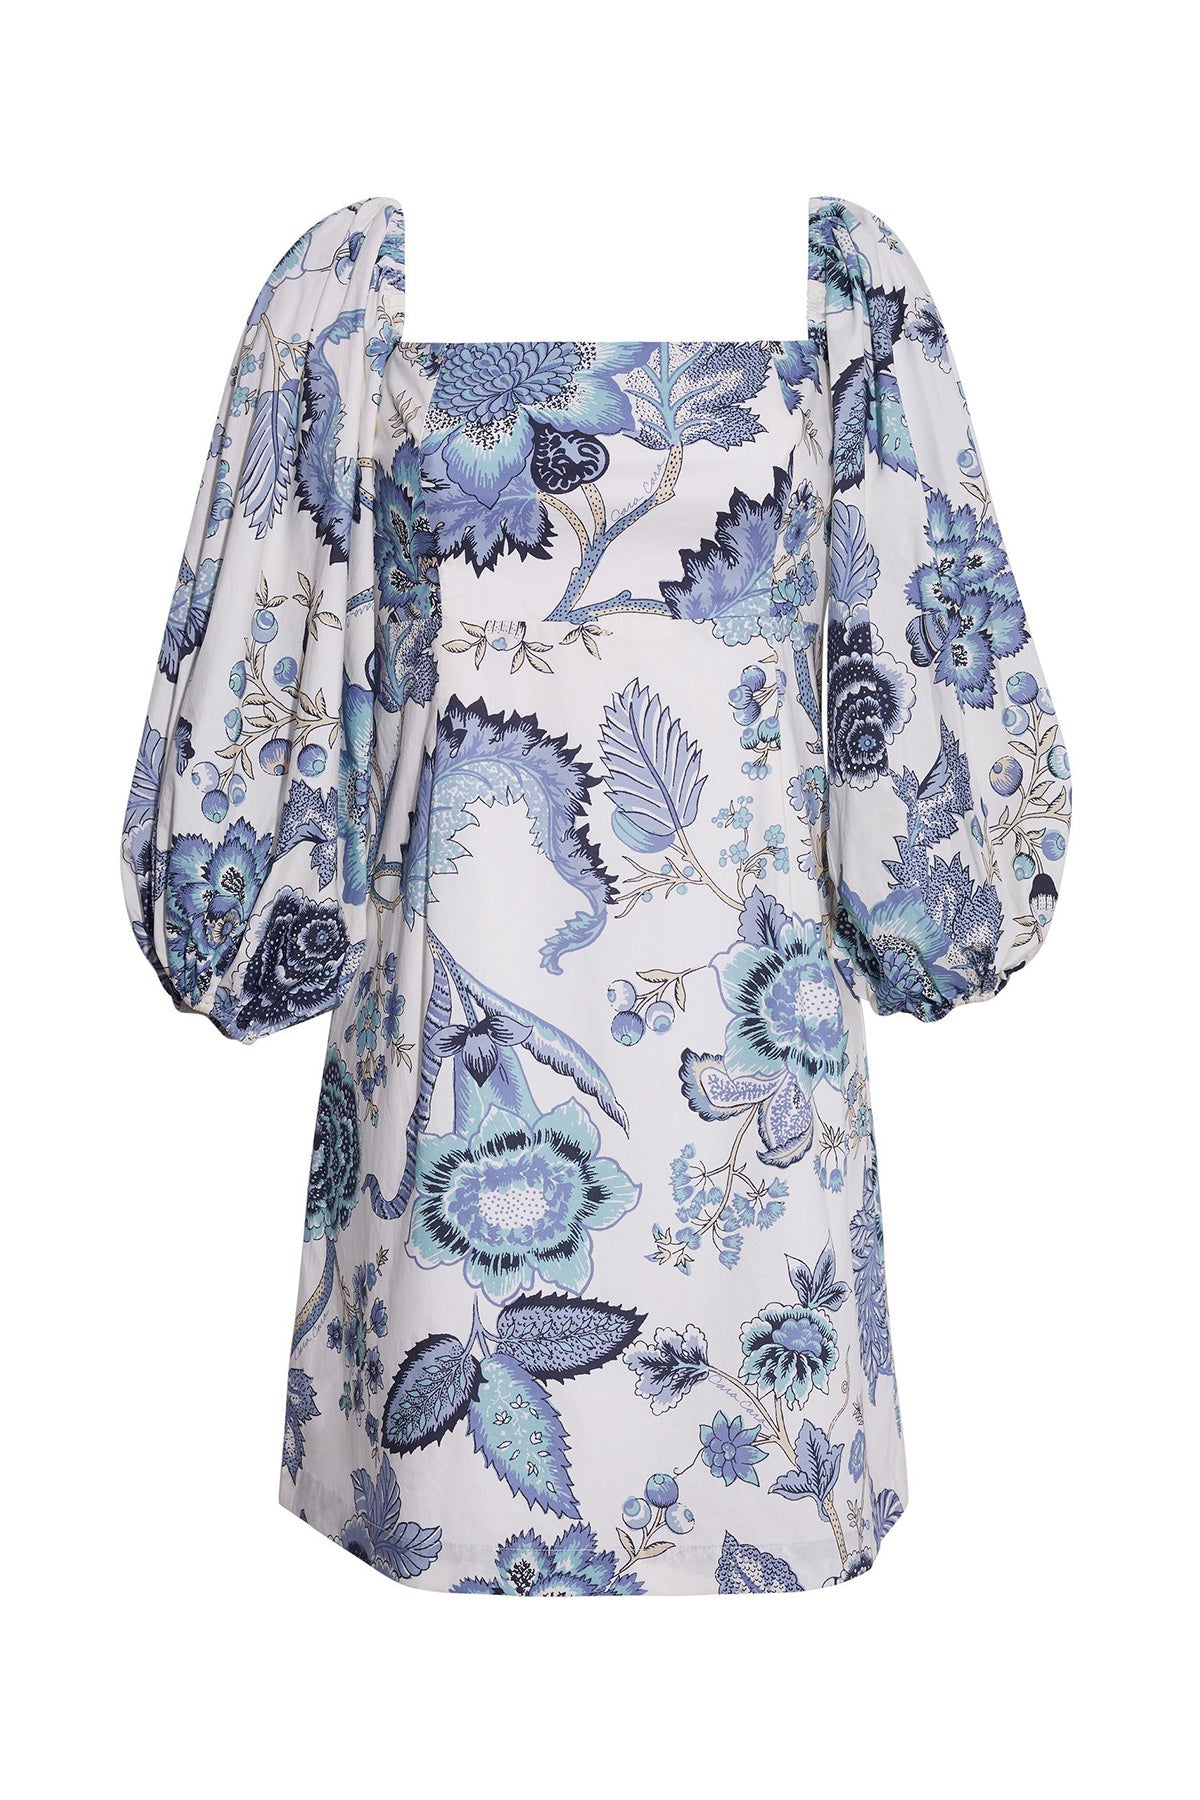 Montauk Dress in Jacobean Blue - shop-olivia.com